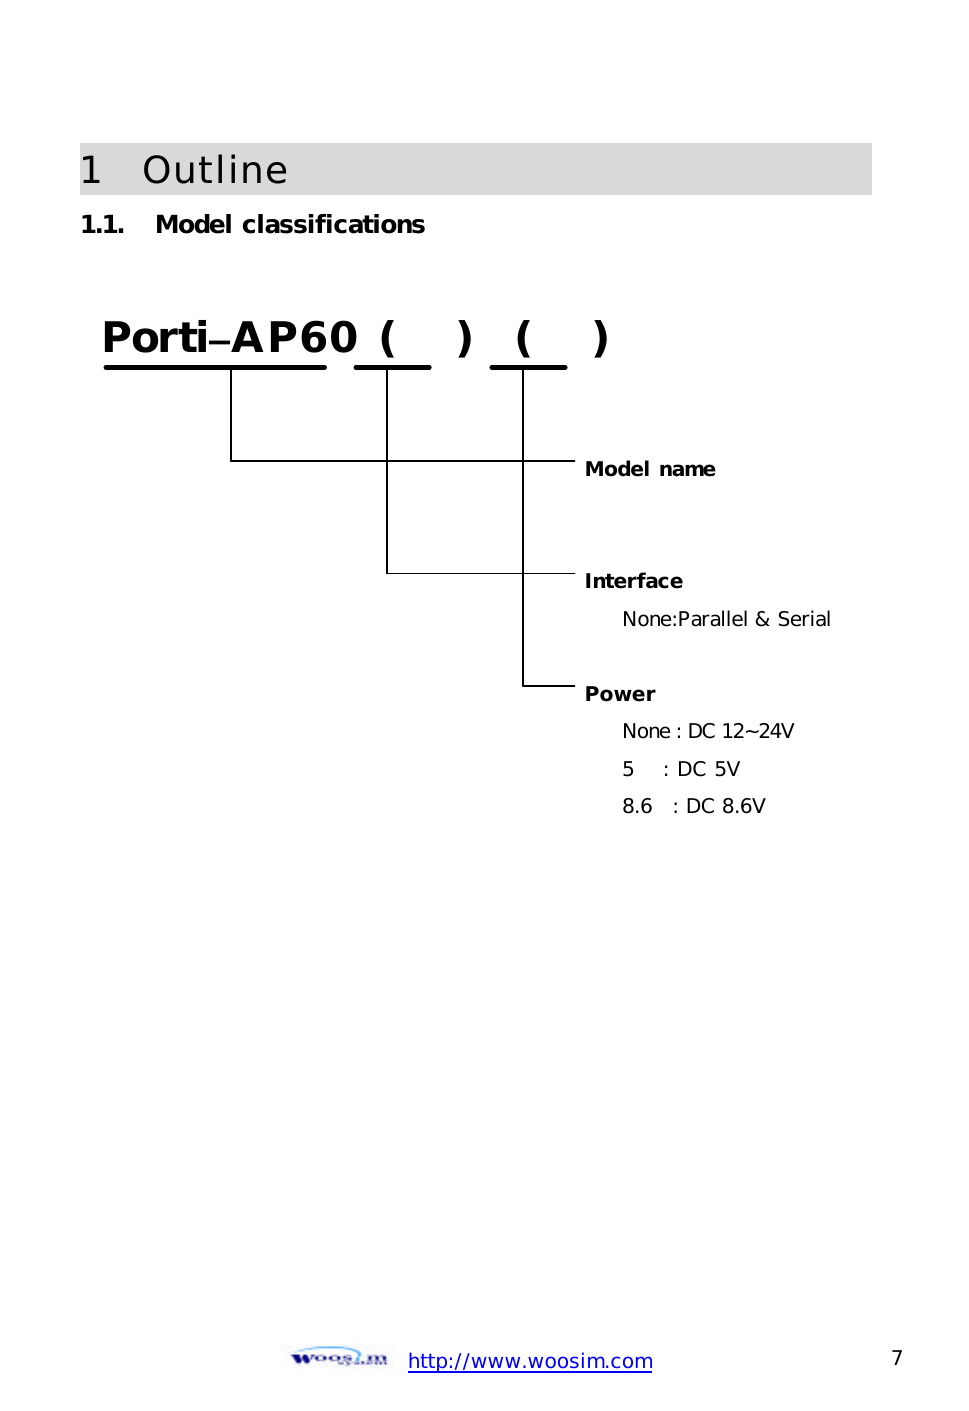  http://www.woosim.com 7                                1  Outline                                                                              1.1. Model classifications    Porti–AP60 (   )  (   )   Model name   Interface None:Parallel &amp; Serial  Power None : DC 12~24V 5    : DC 5V 8.6   : DC 8.6V                                           